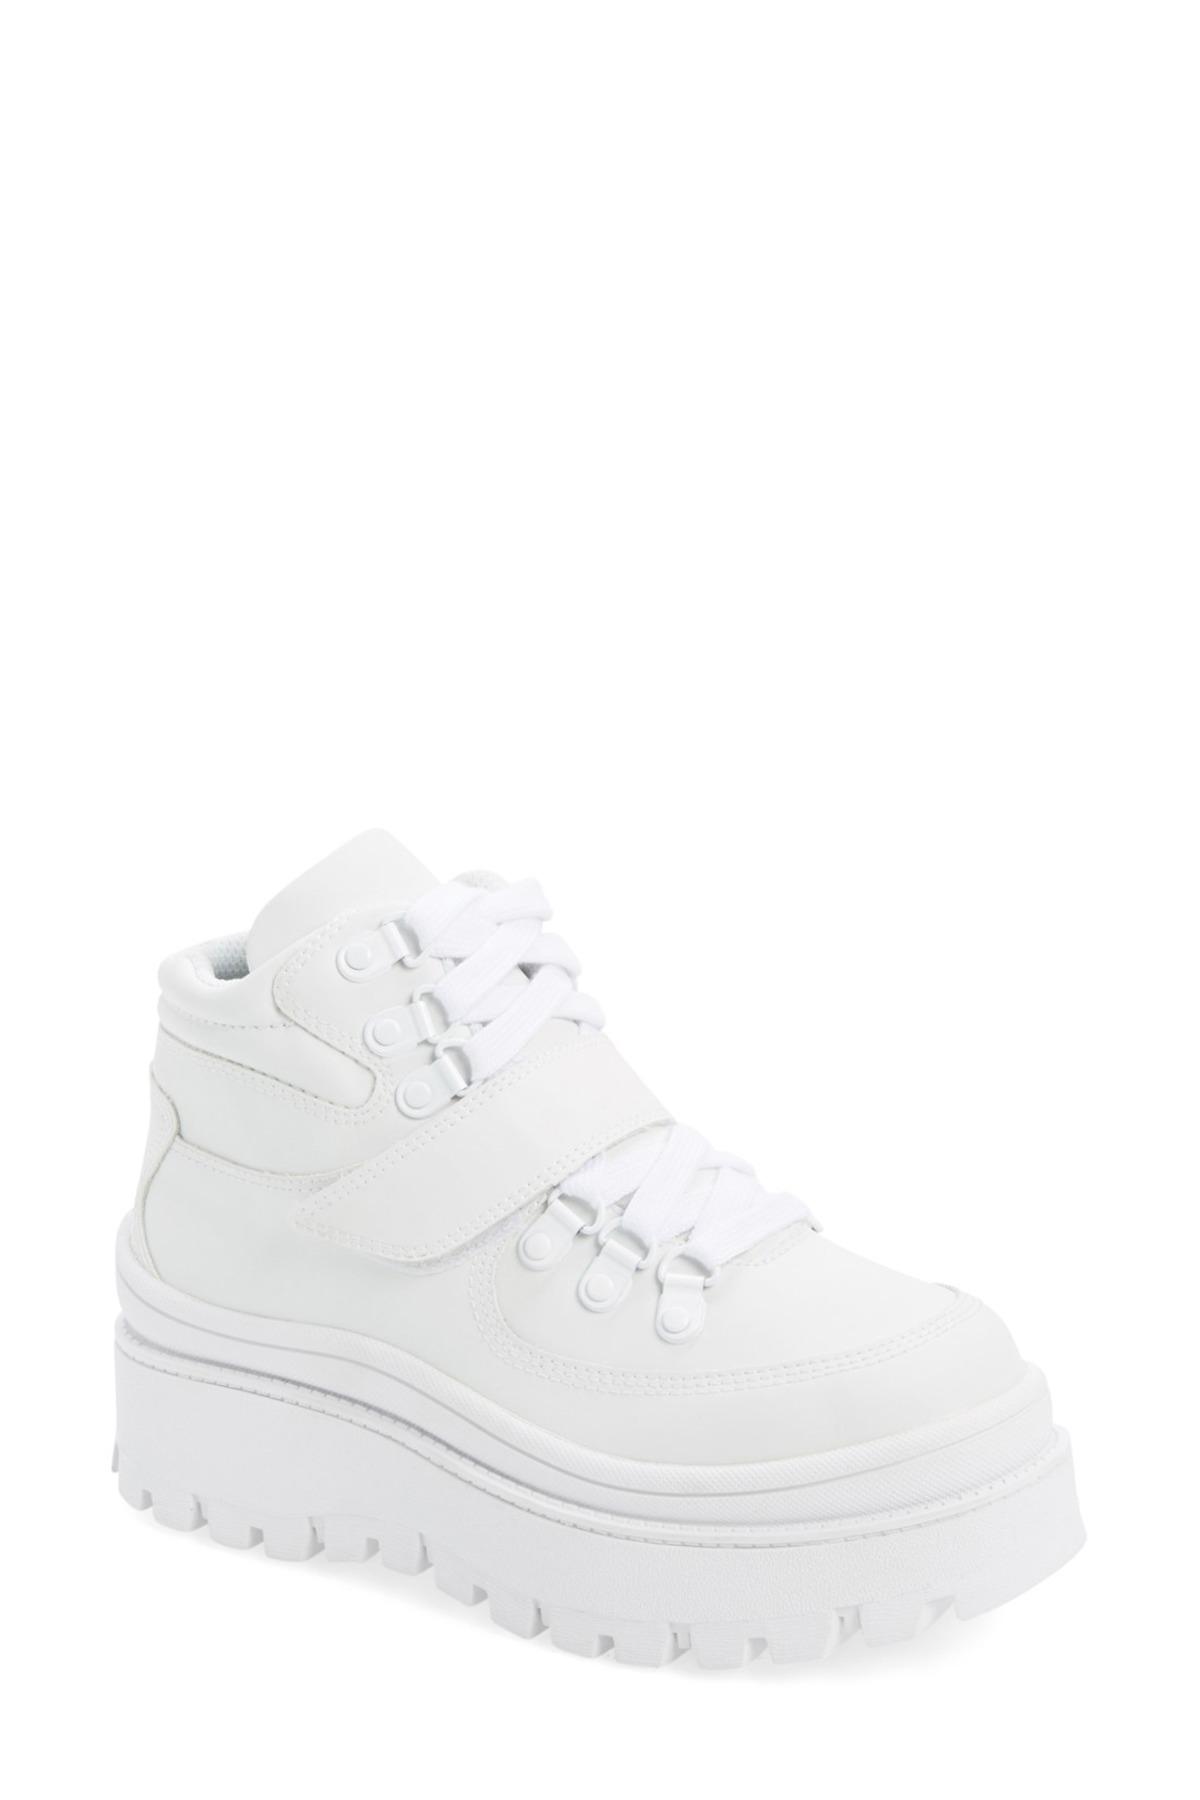 breathe Imagination Accidentally Jeffrey Campbell Top-peak Platform Sneaker in White | Lyst